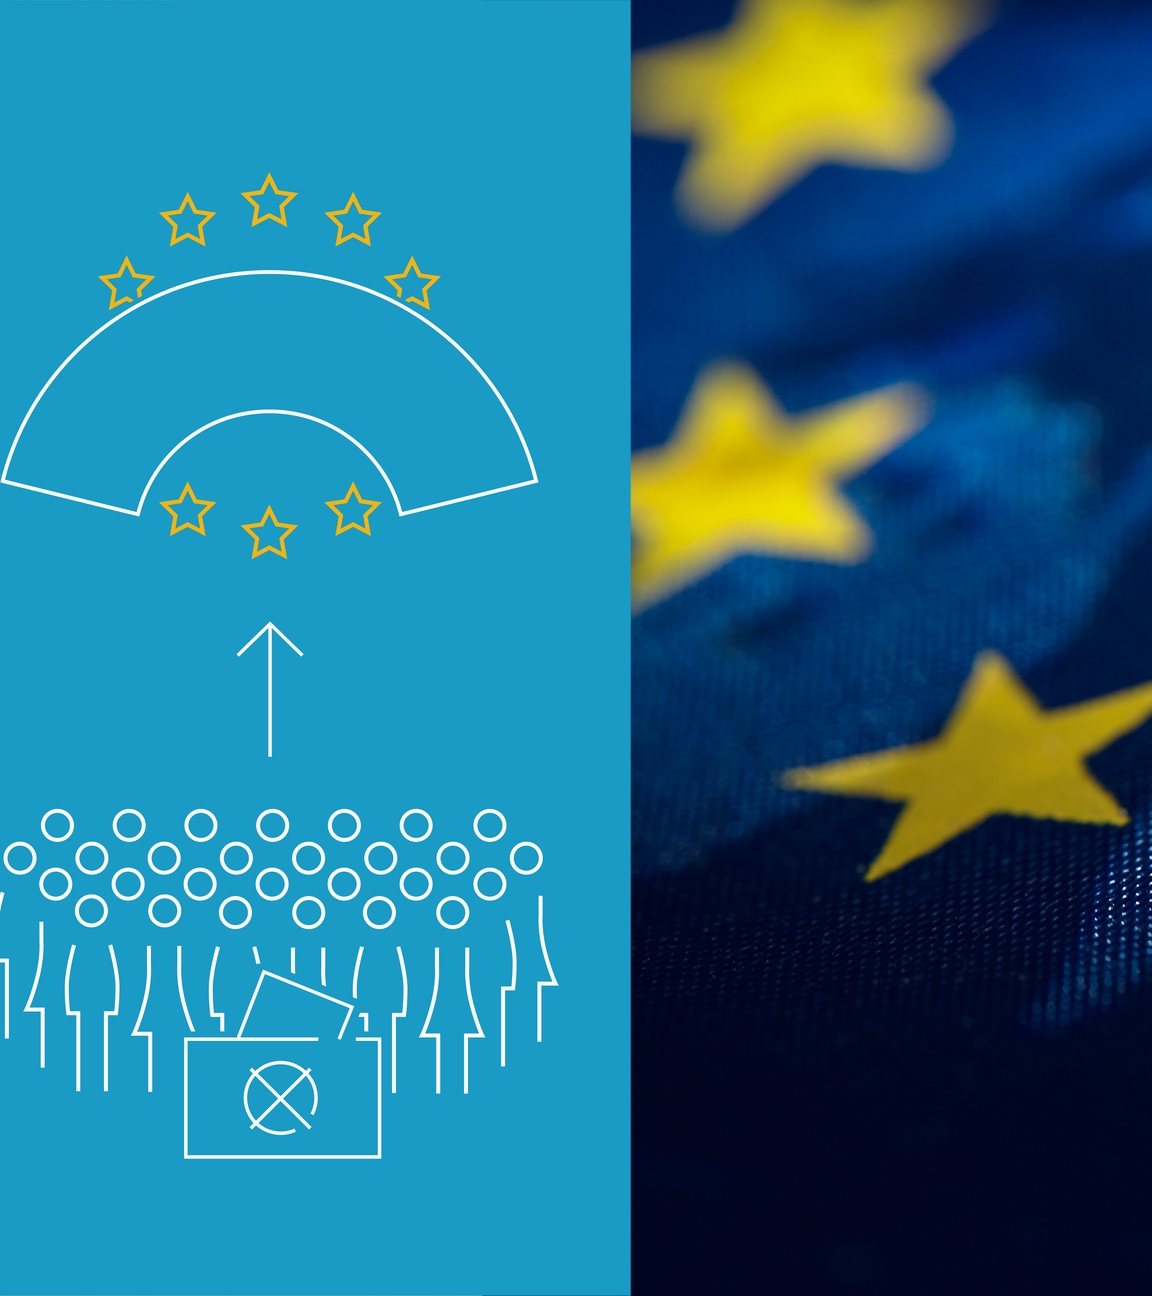 Pictogramm Menschen und EU-Parlament und Foto EU-Flagge